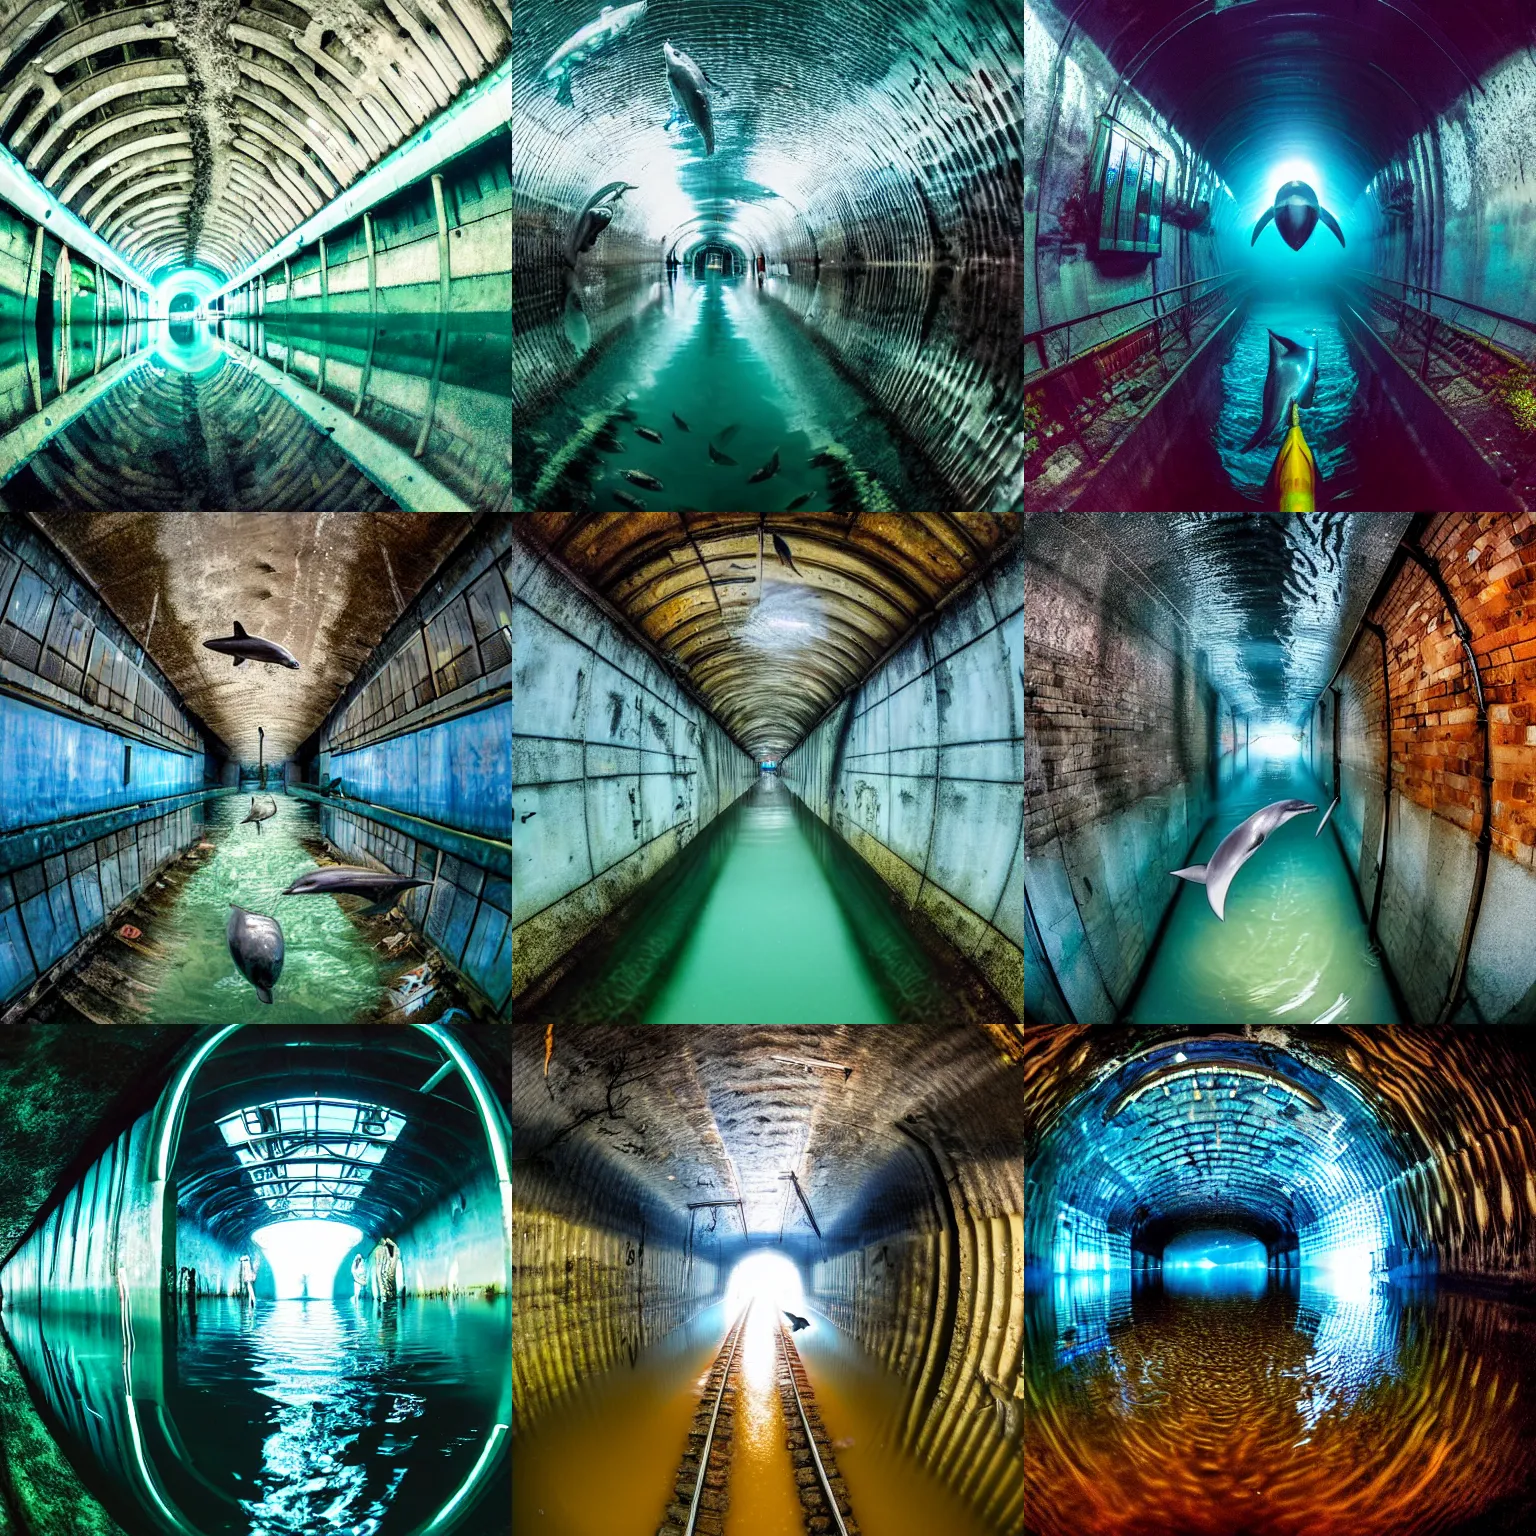 Prompt: a flooded railway tunnel with a dolphin swimming in it, cyberpunk art by vlady kibalchich russakov, behance, ecological art, dystopian art, fisheye lens, hall of mirrors